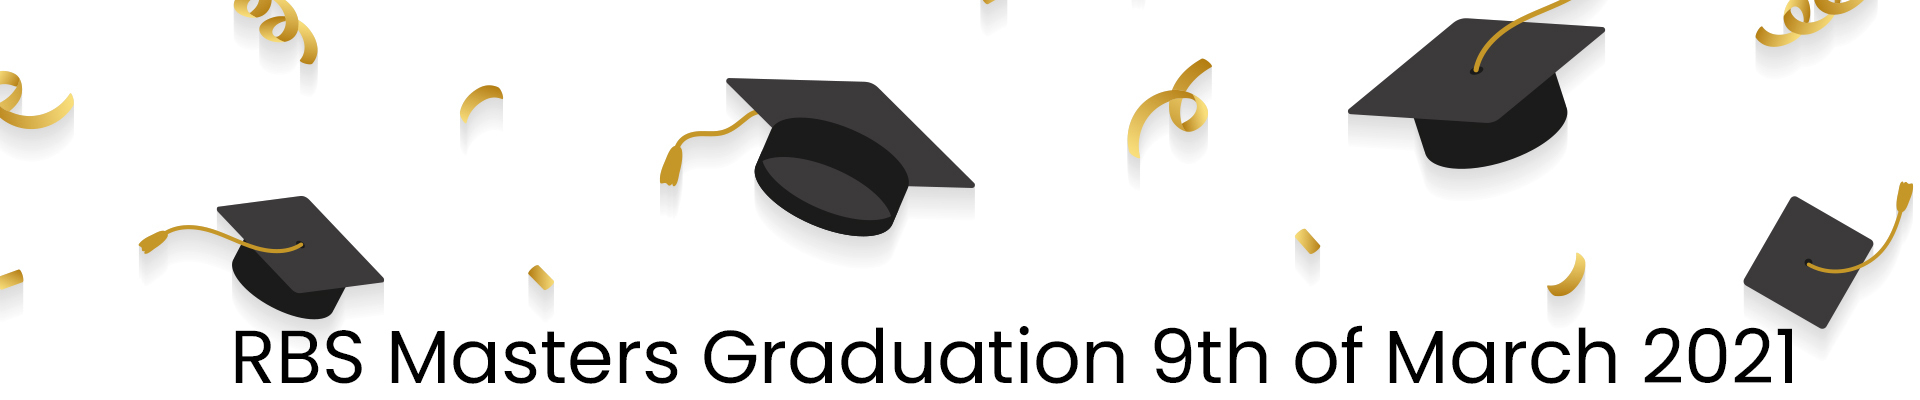 Master Graduation Online Ceremony 9 March 2021